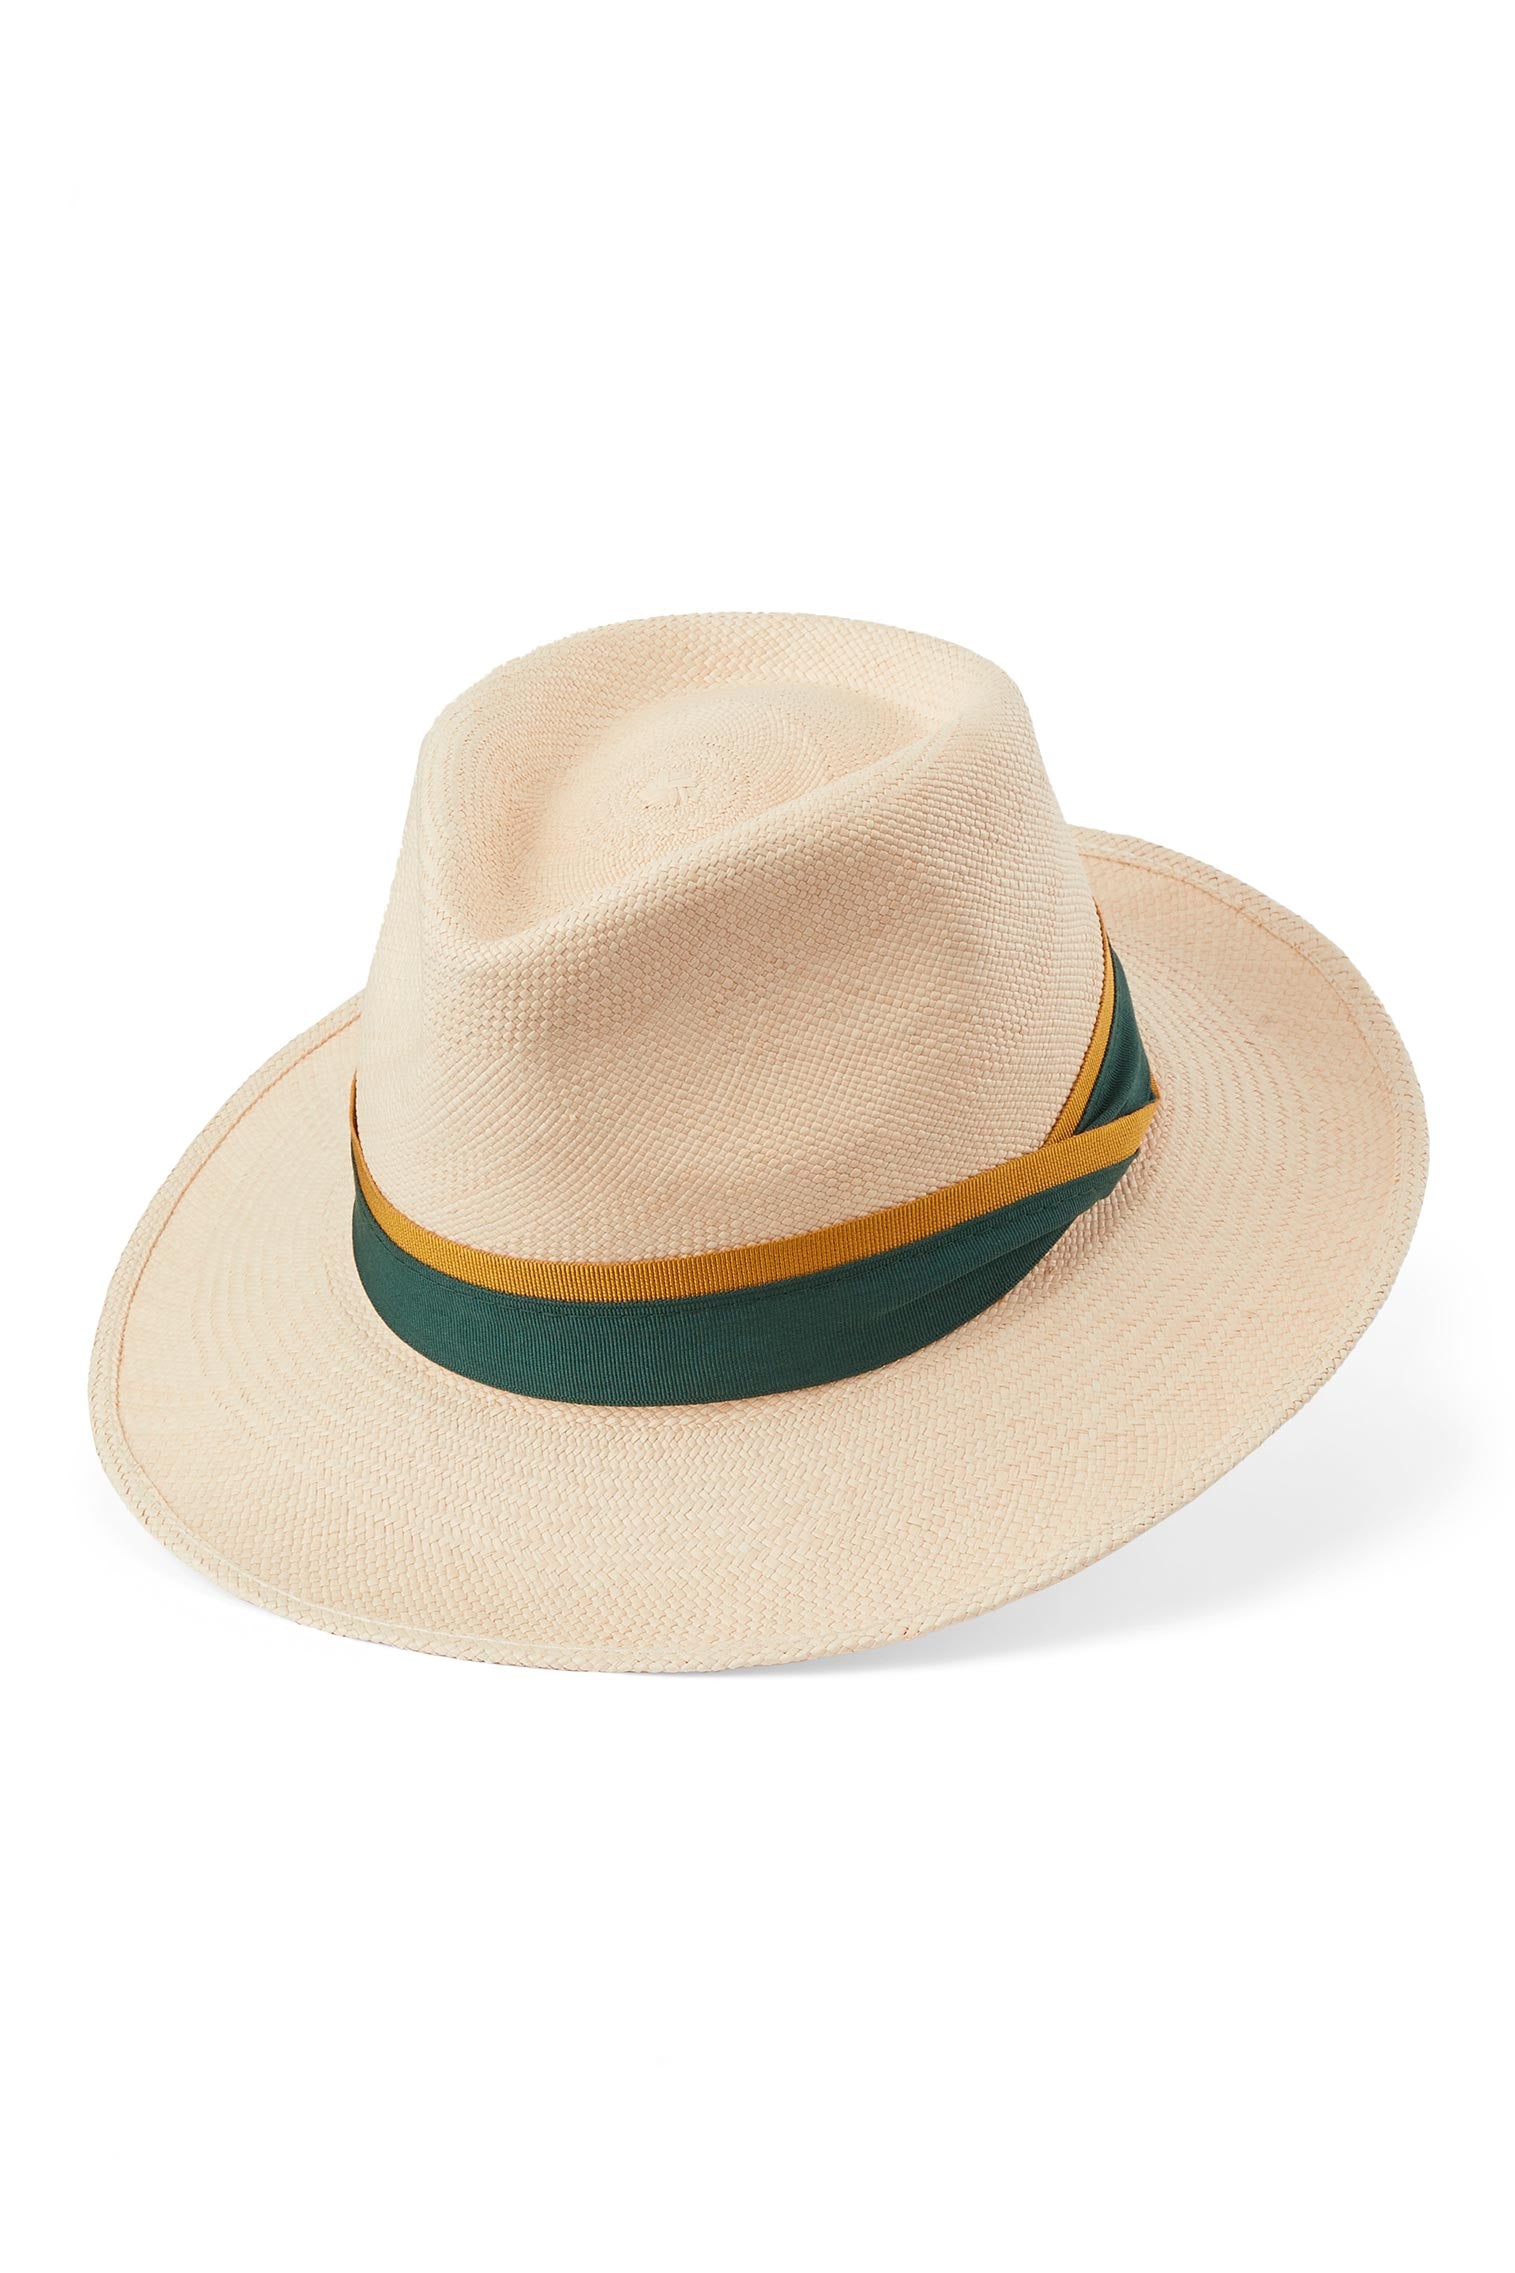 Highgrove Panama - Sun Hats & Boaters - Lock & Co. Hatters London UK